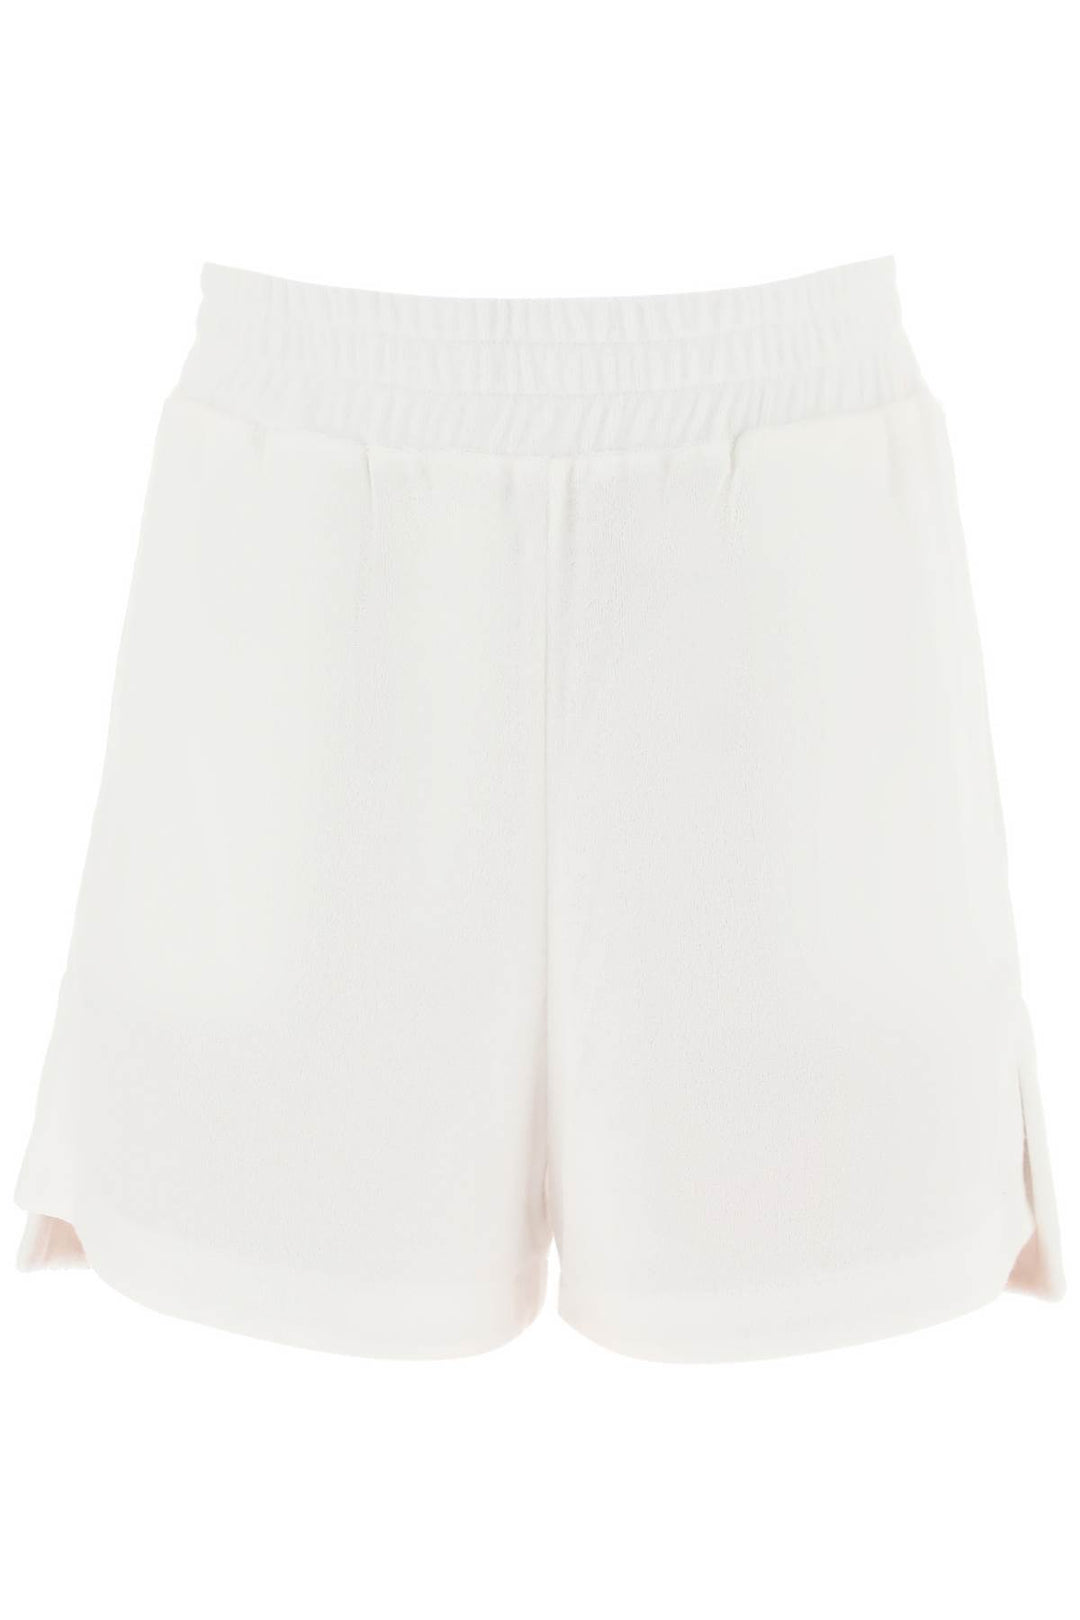 Mvp Wardrobe 'Sunset' Light Terry Shorts   Bianco